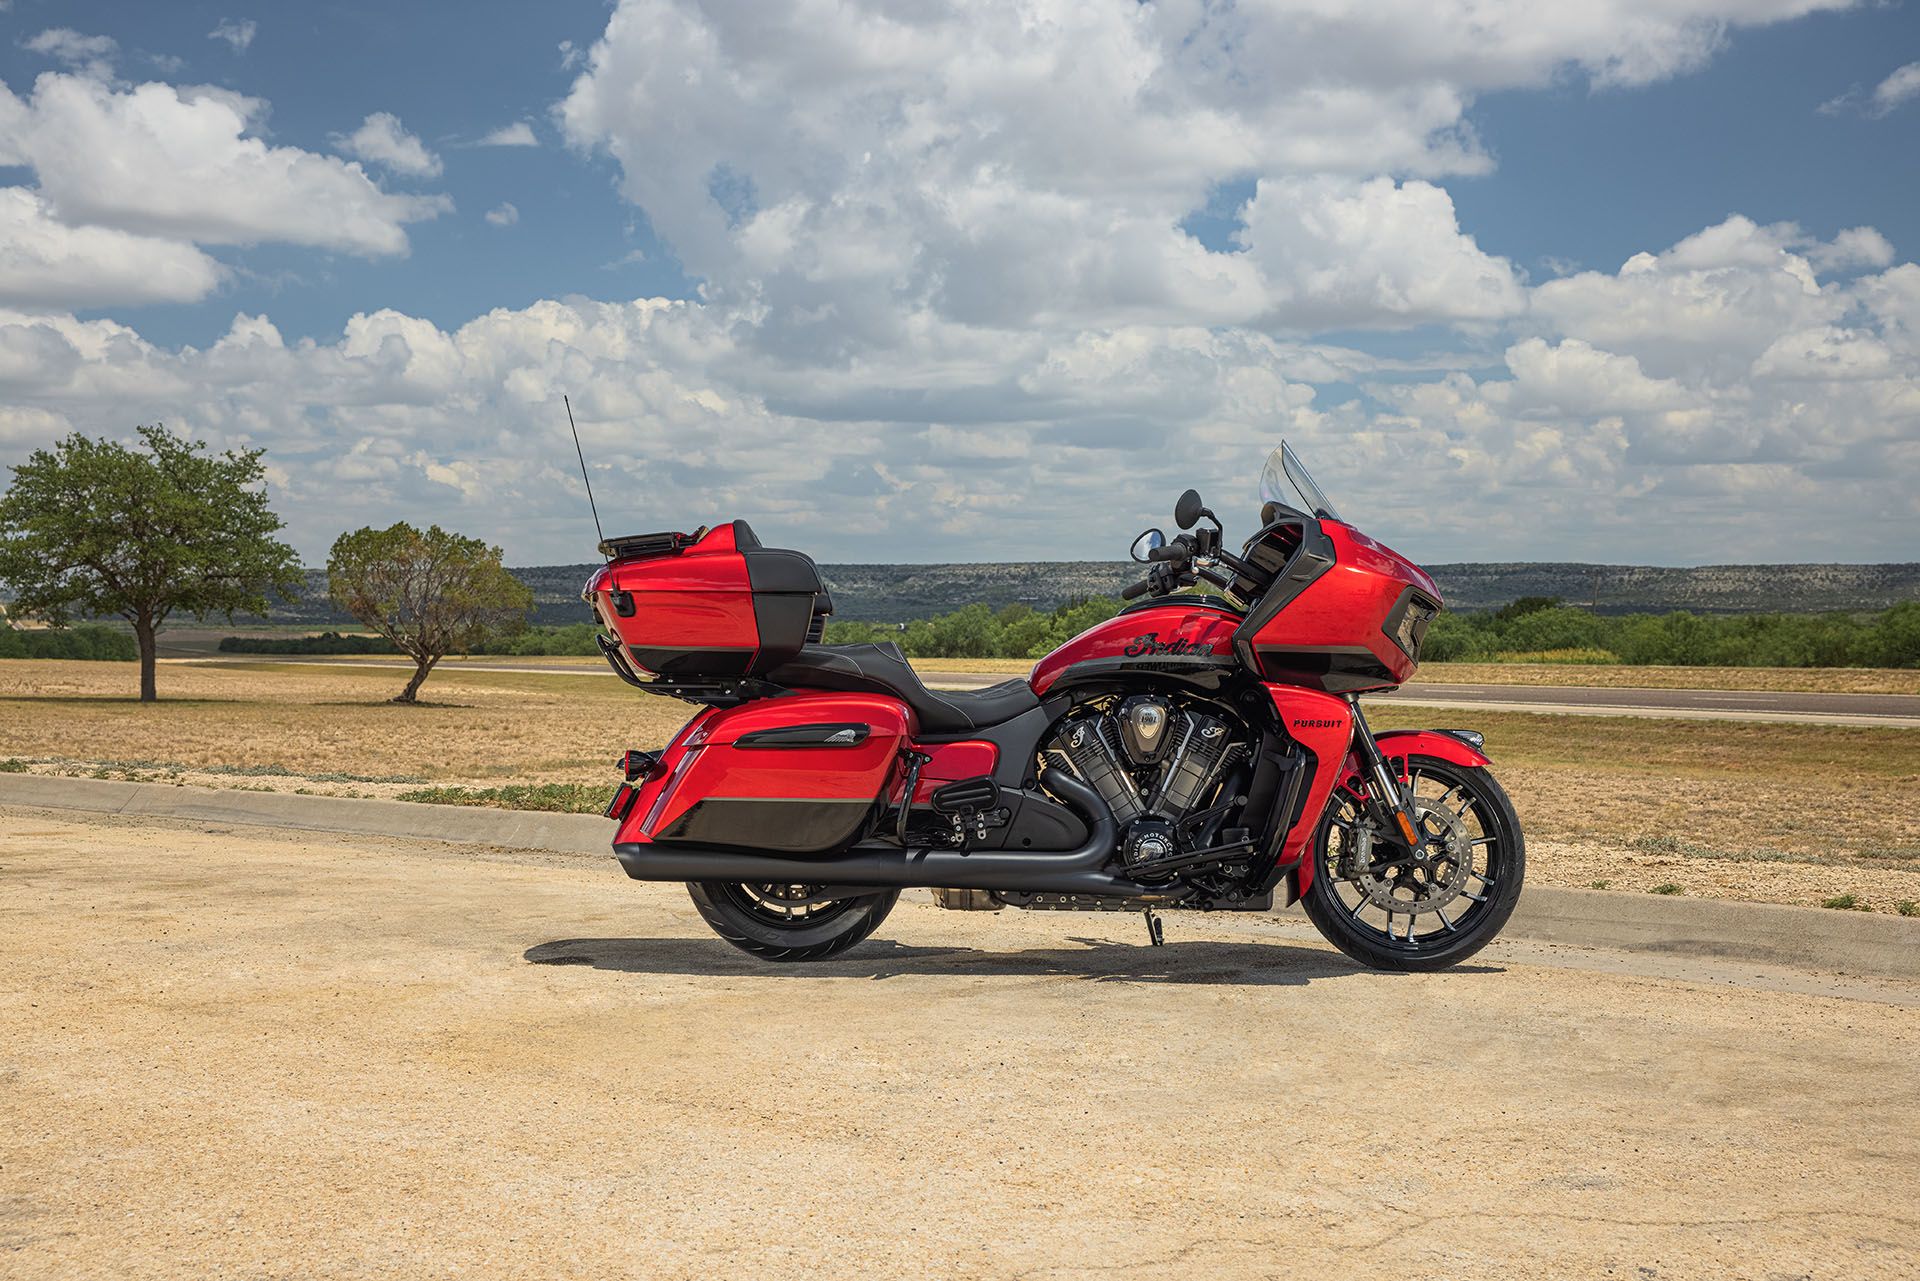 2022 Indian Motorcycle Pursuit® Dark Horse® with Premium Package in Broken Arrow, Oklahoma - Photo 7